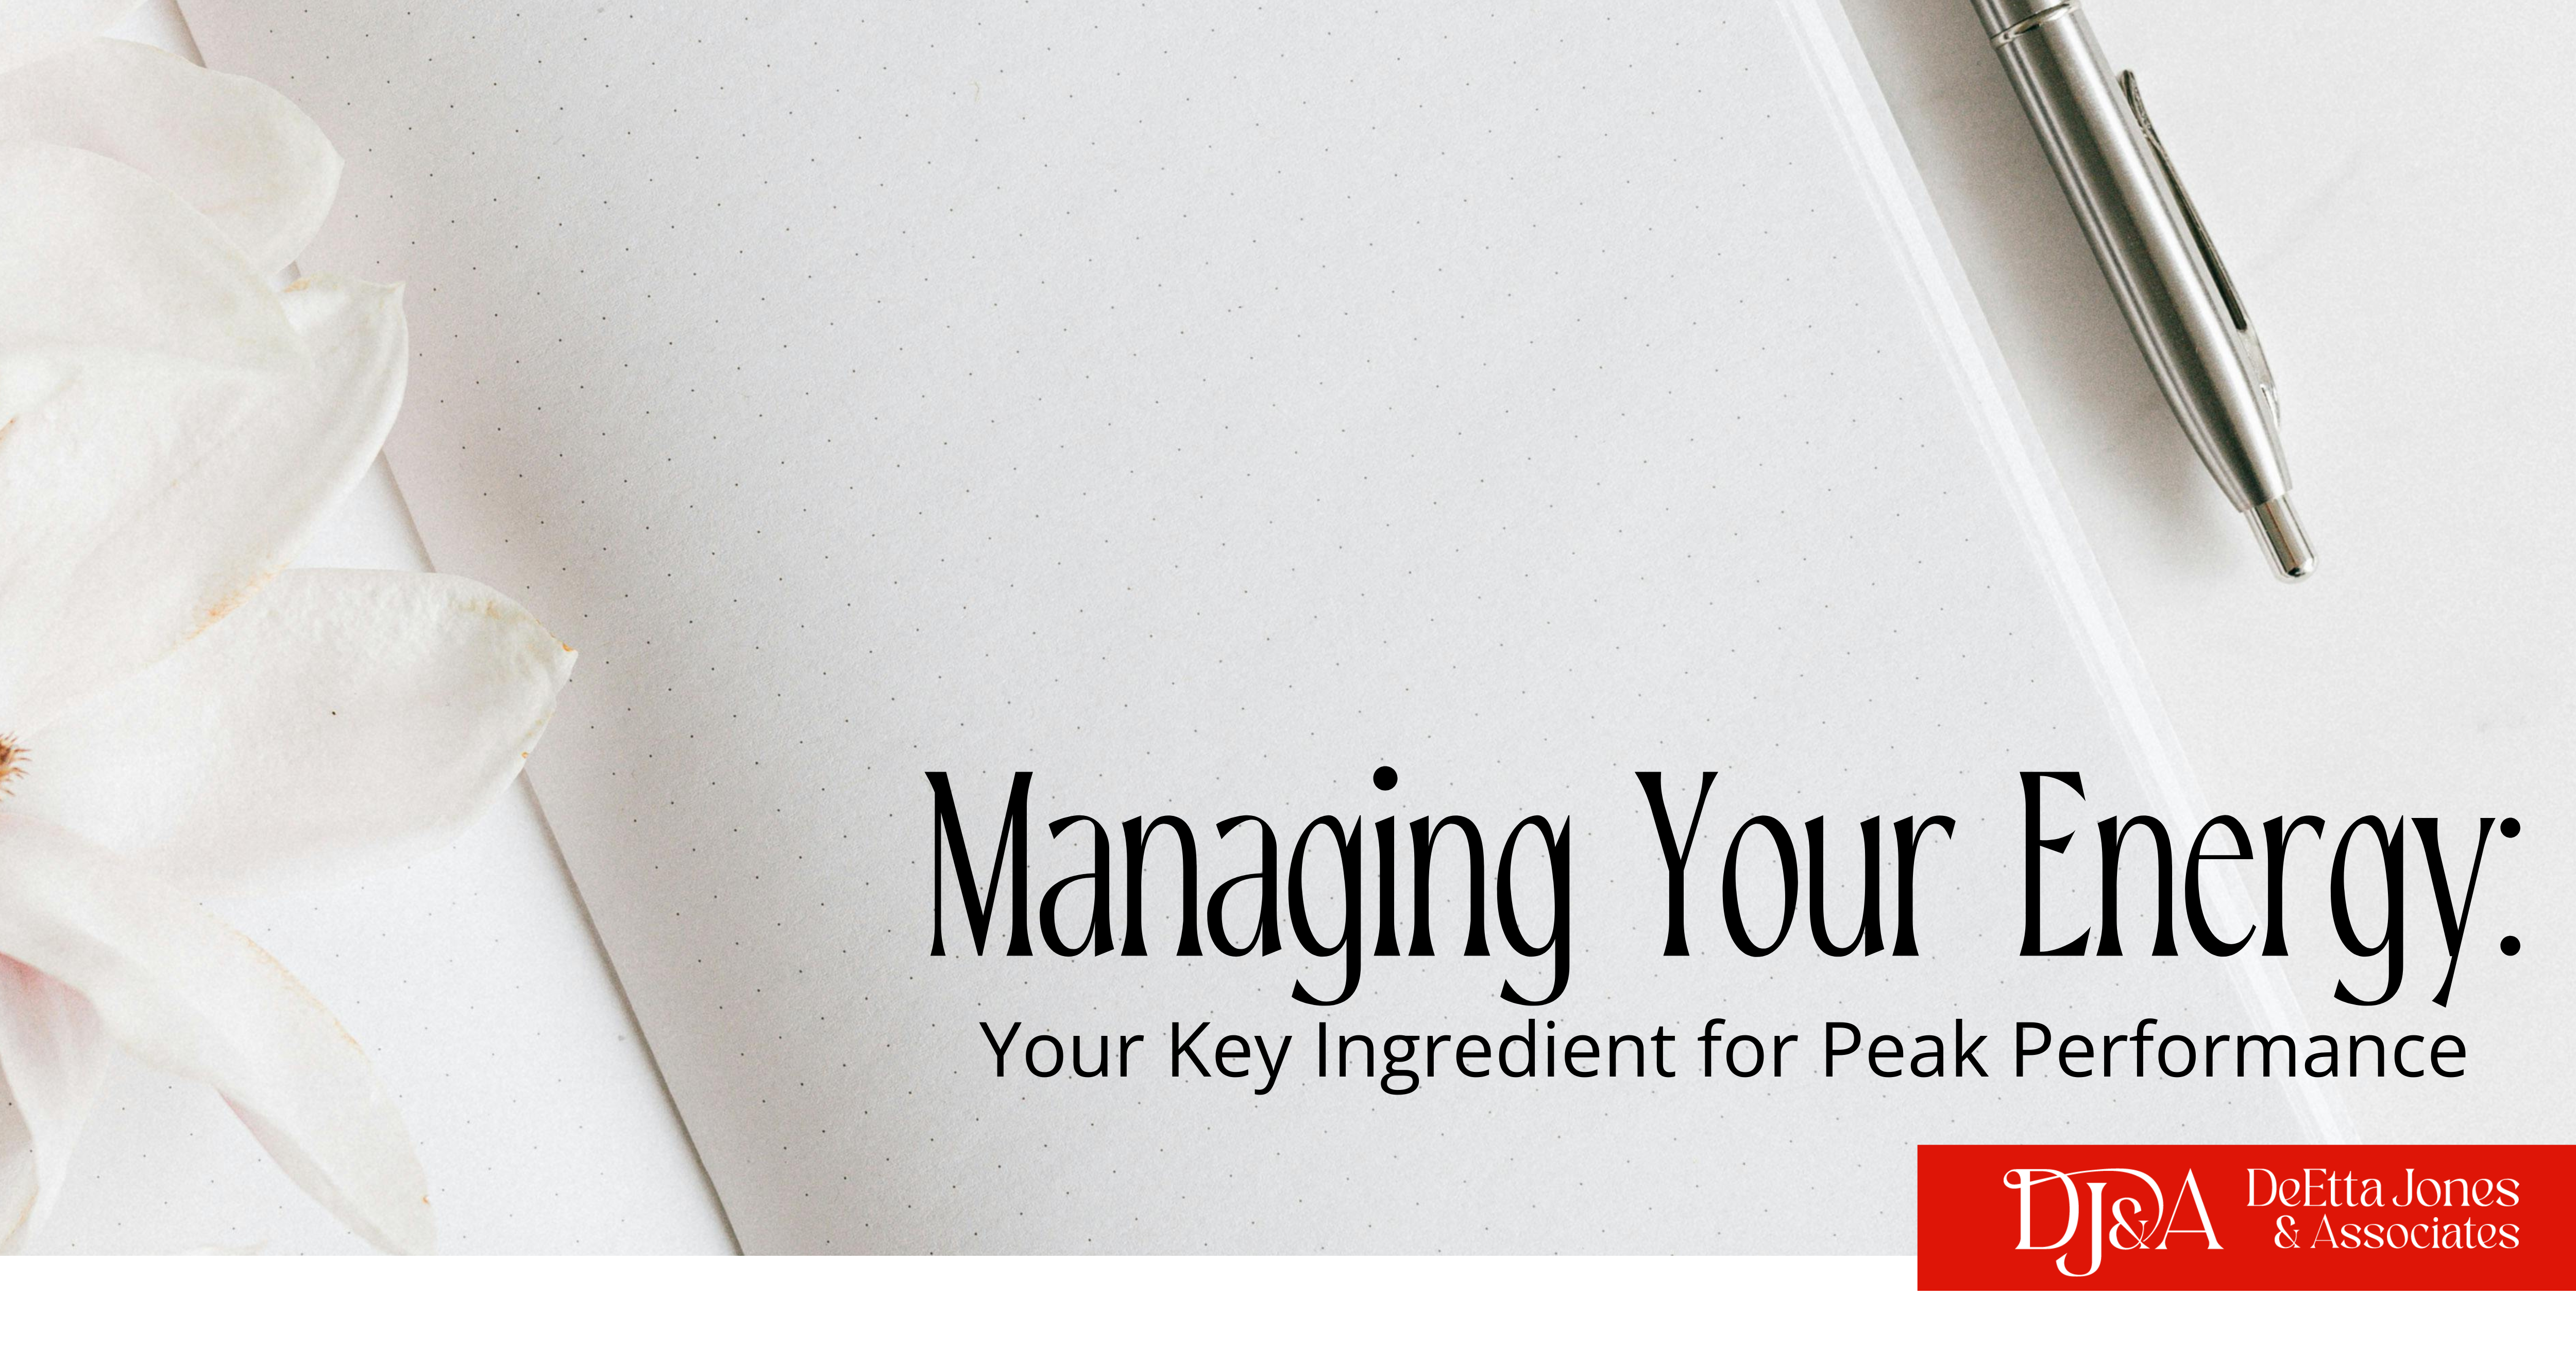 Managing Energy: Your Key Ingredient for Peak Performance